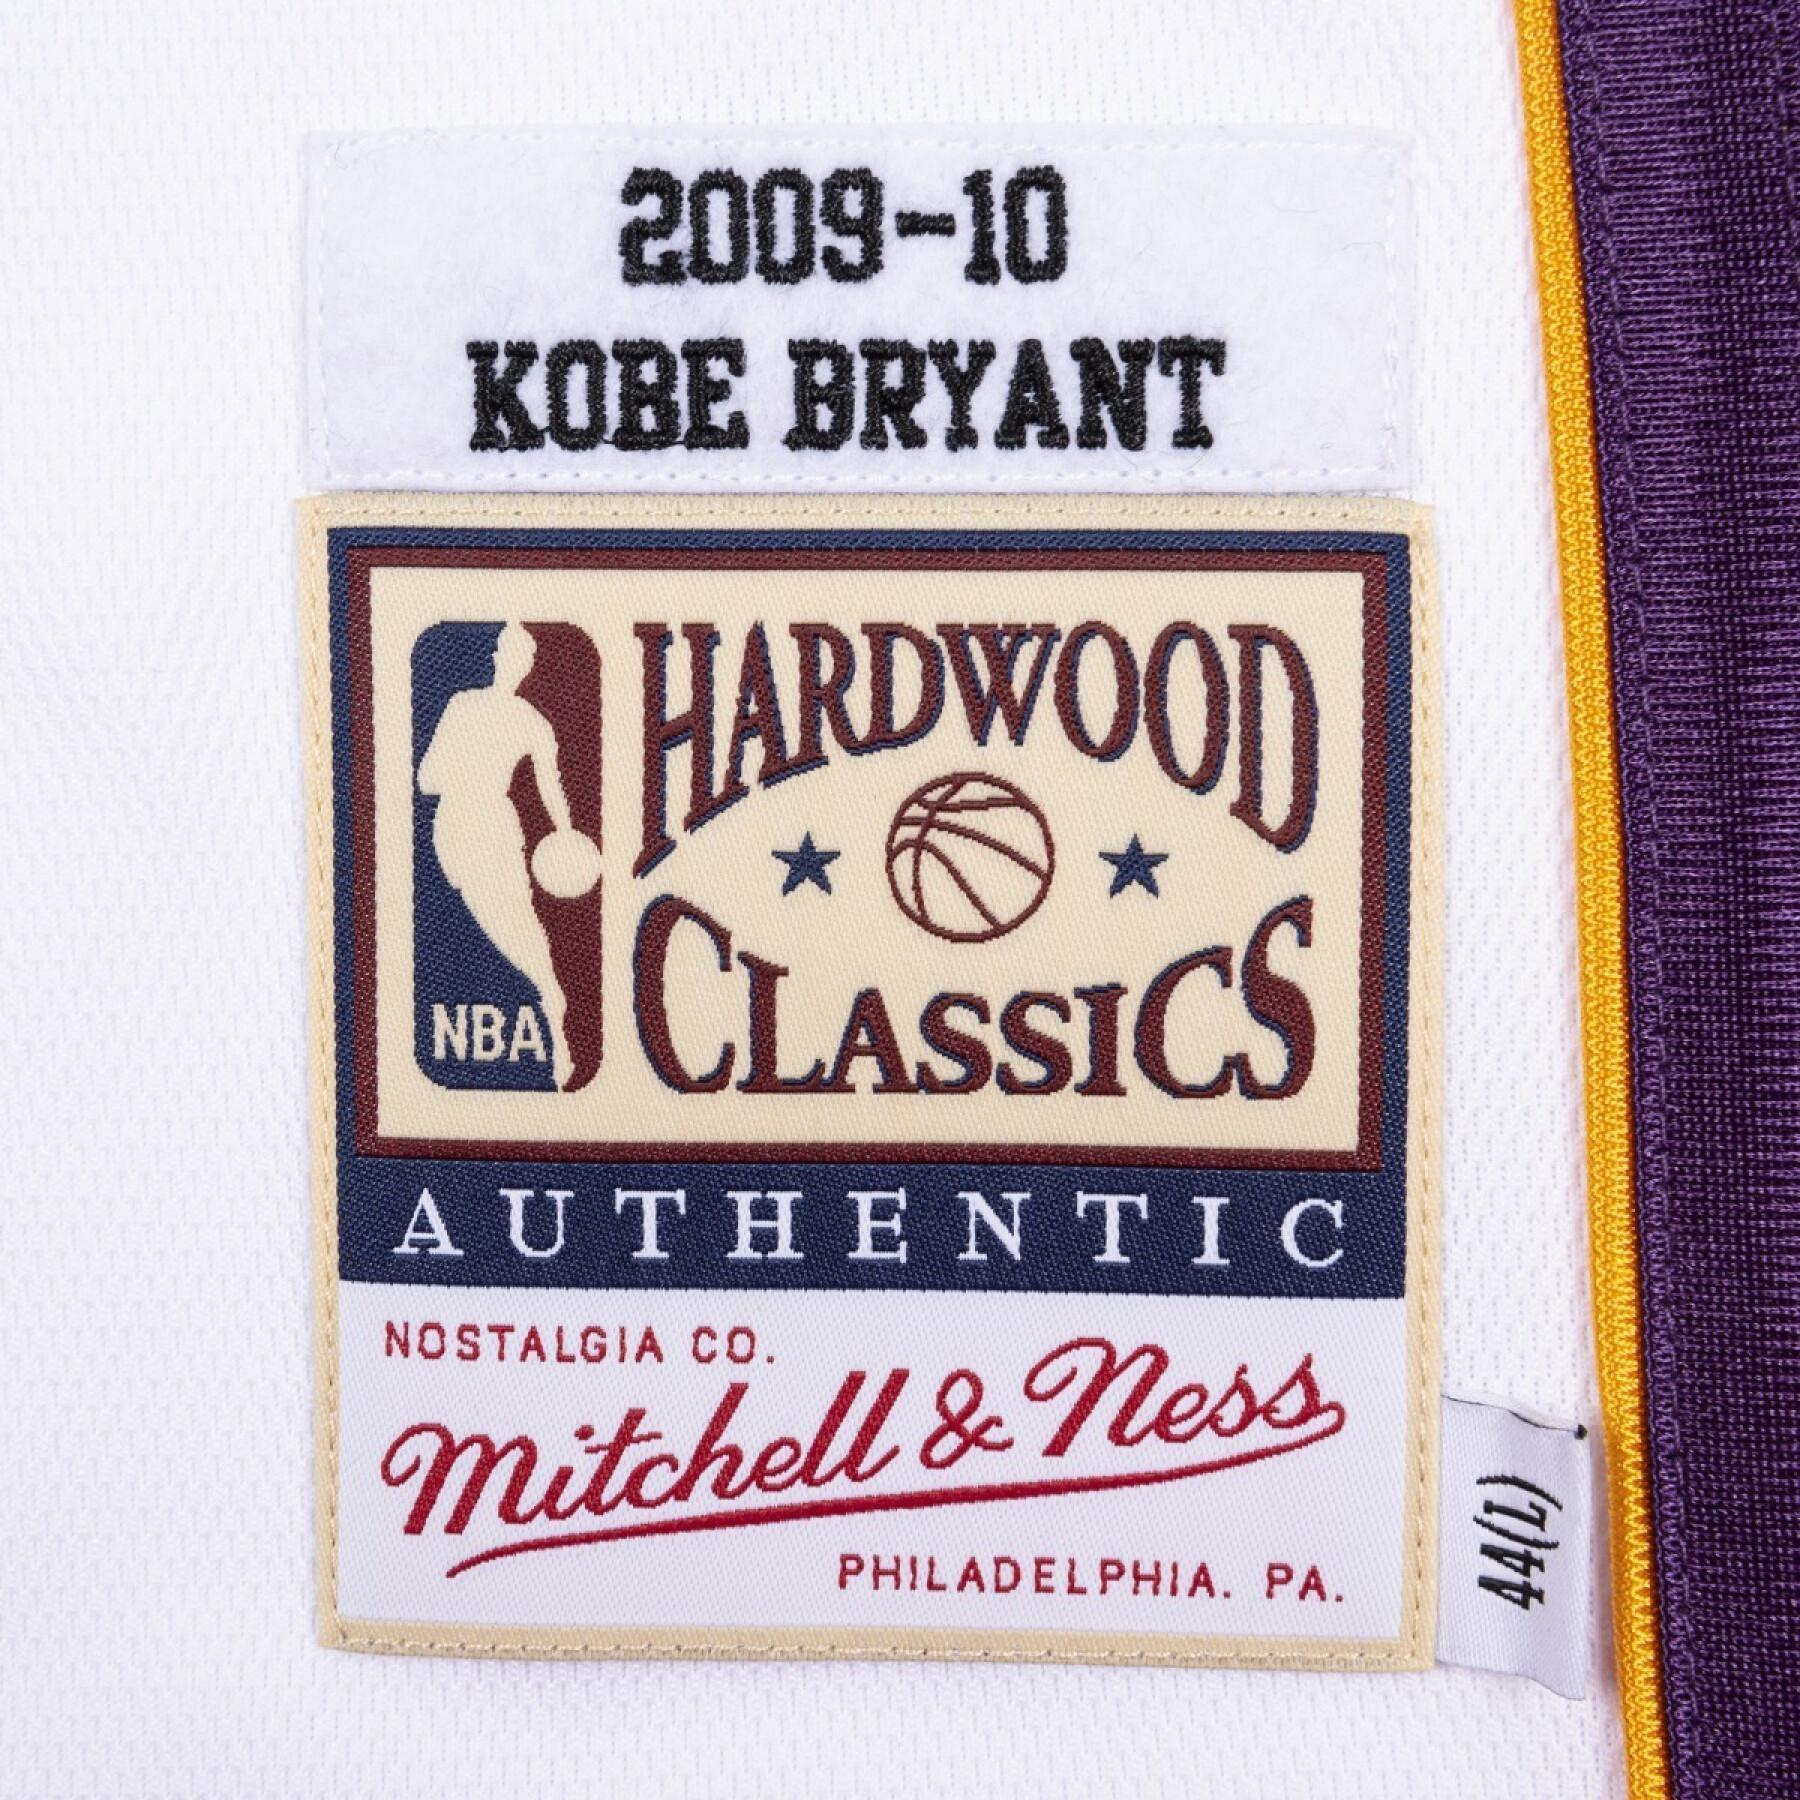 Trikot Los Angeles Lakers NBA Authentic 09 Kobe Bryant